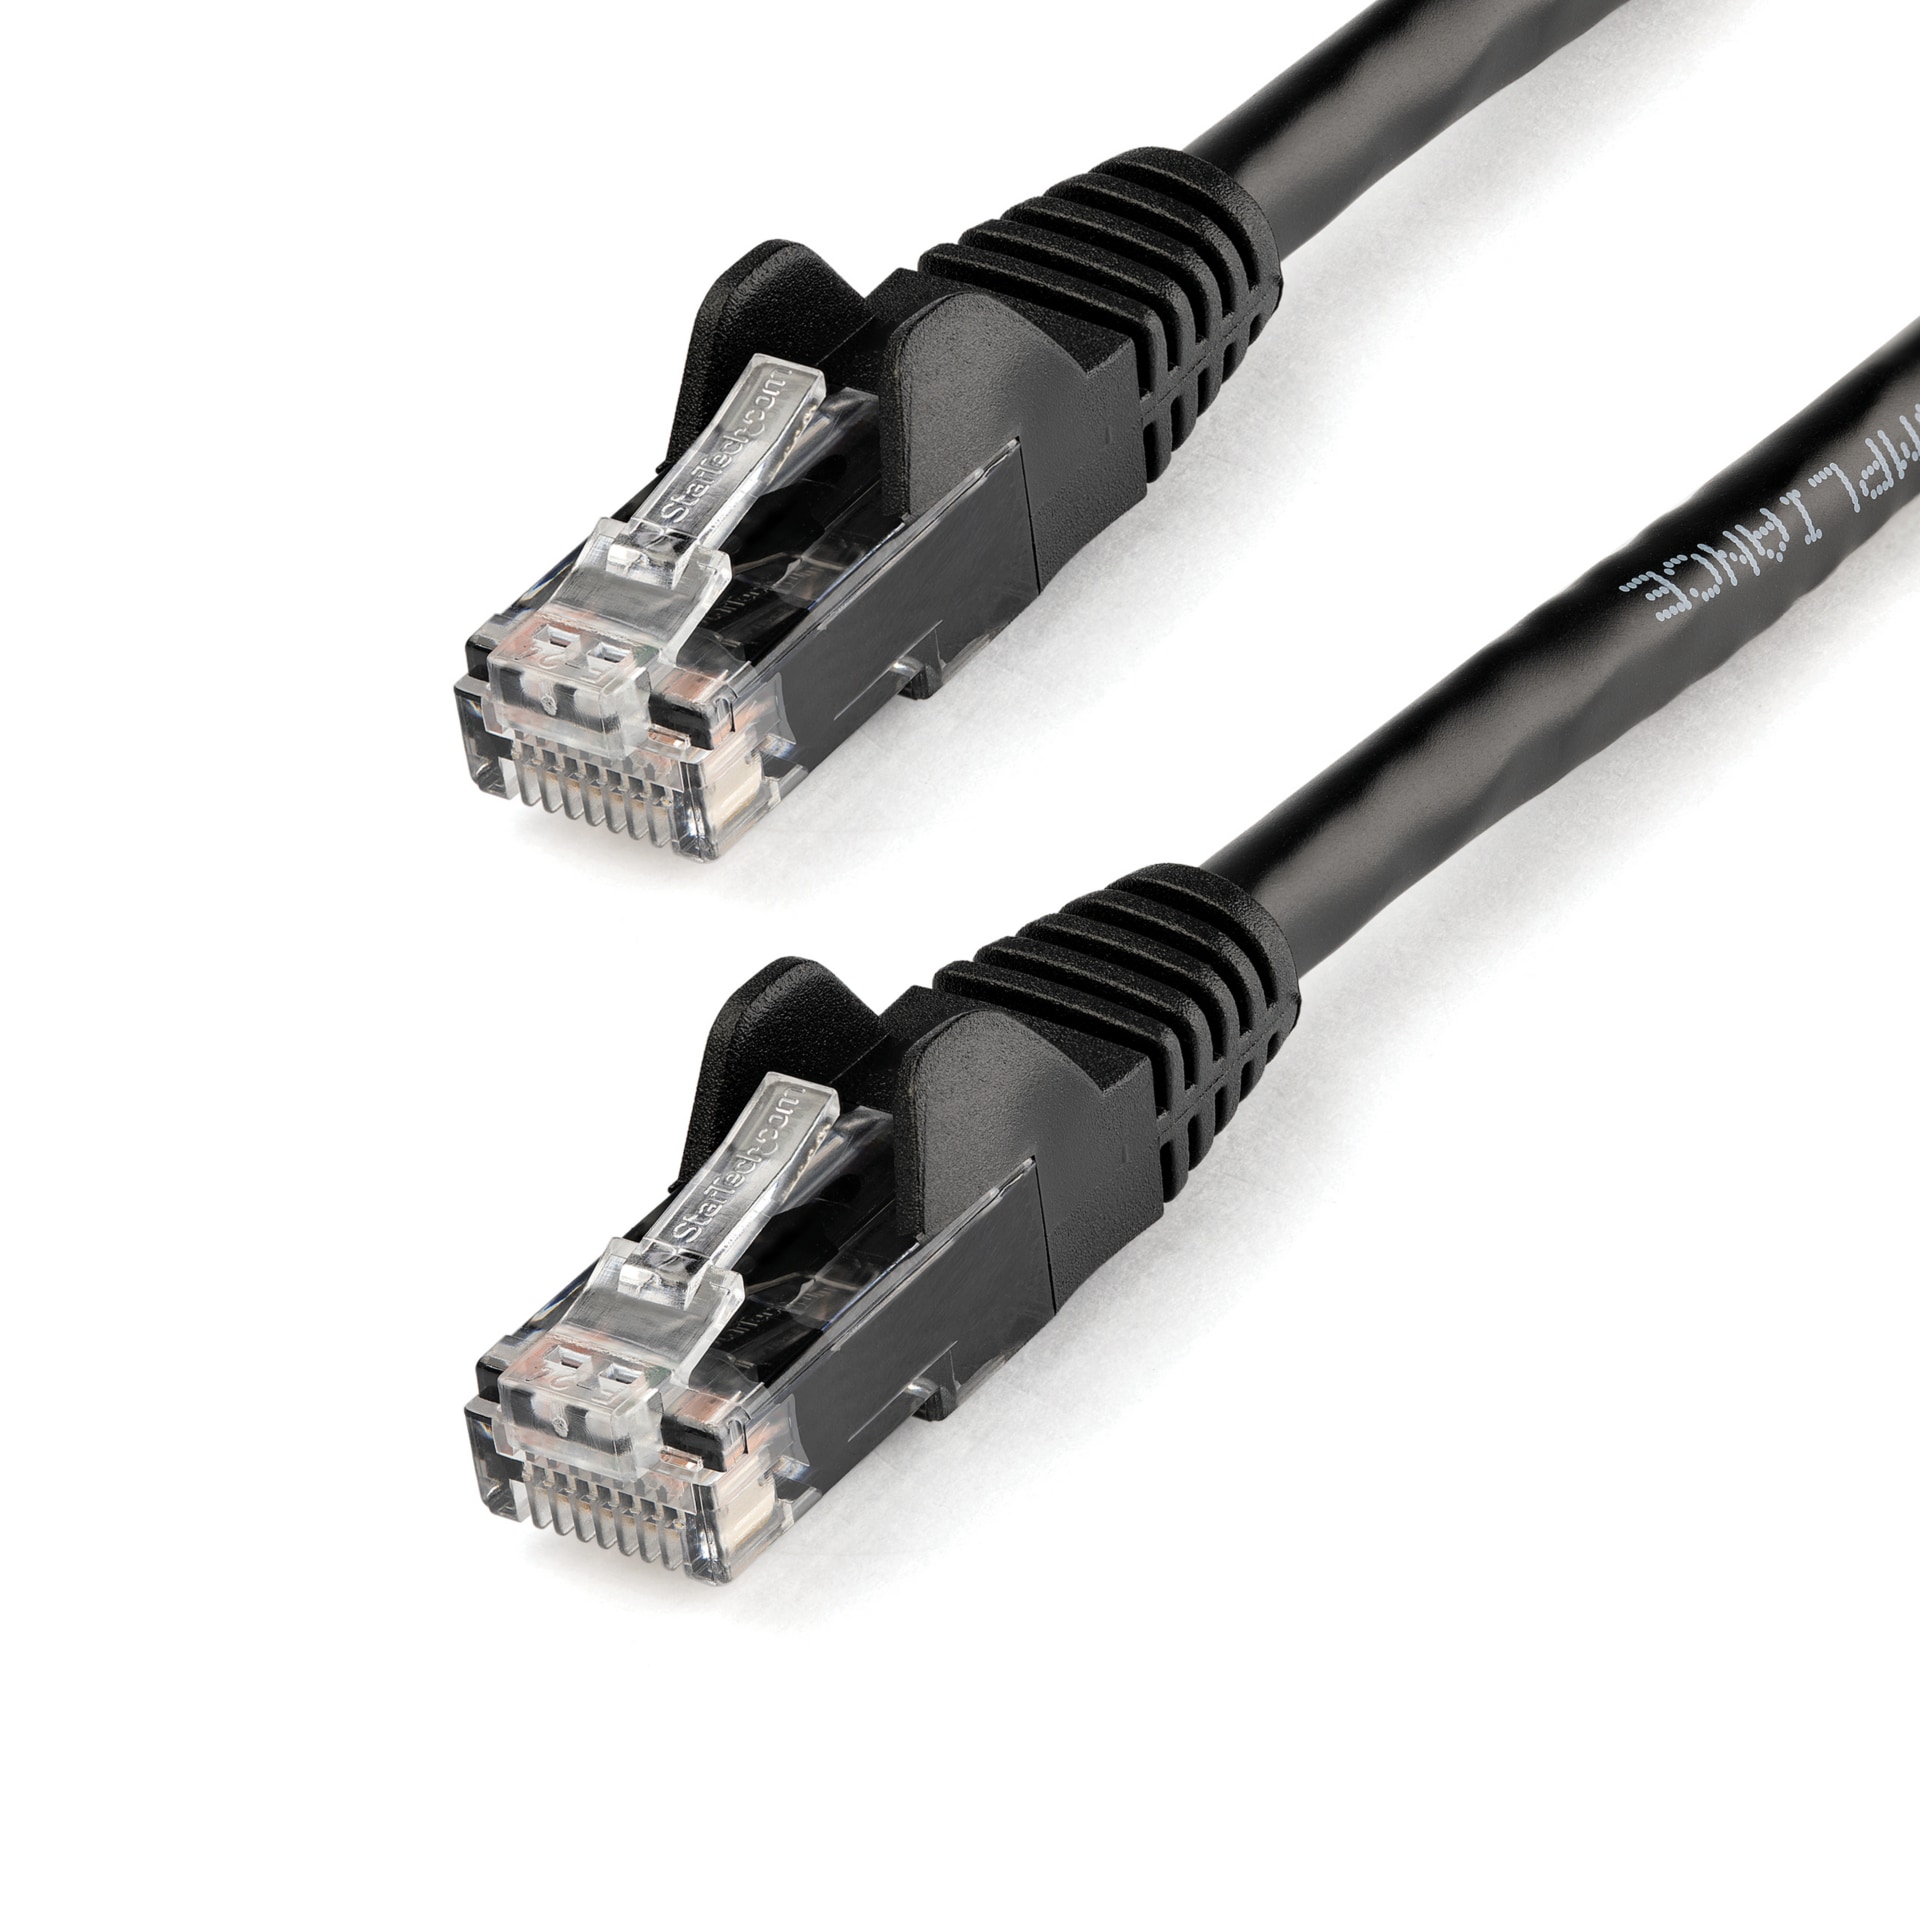 StarTech.com 25ft CAT6 Ethernet Cable Black Snagless UTP CAT 6 Gigabit Cord/Wire 100W PoE 650MHz